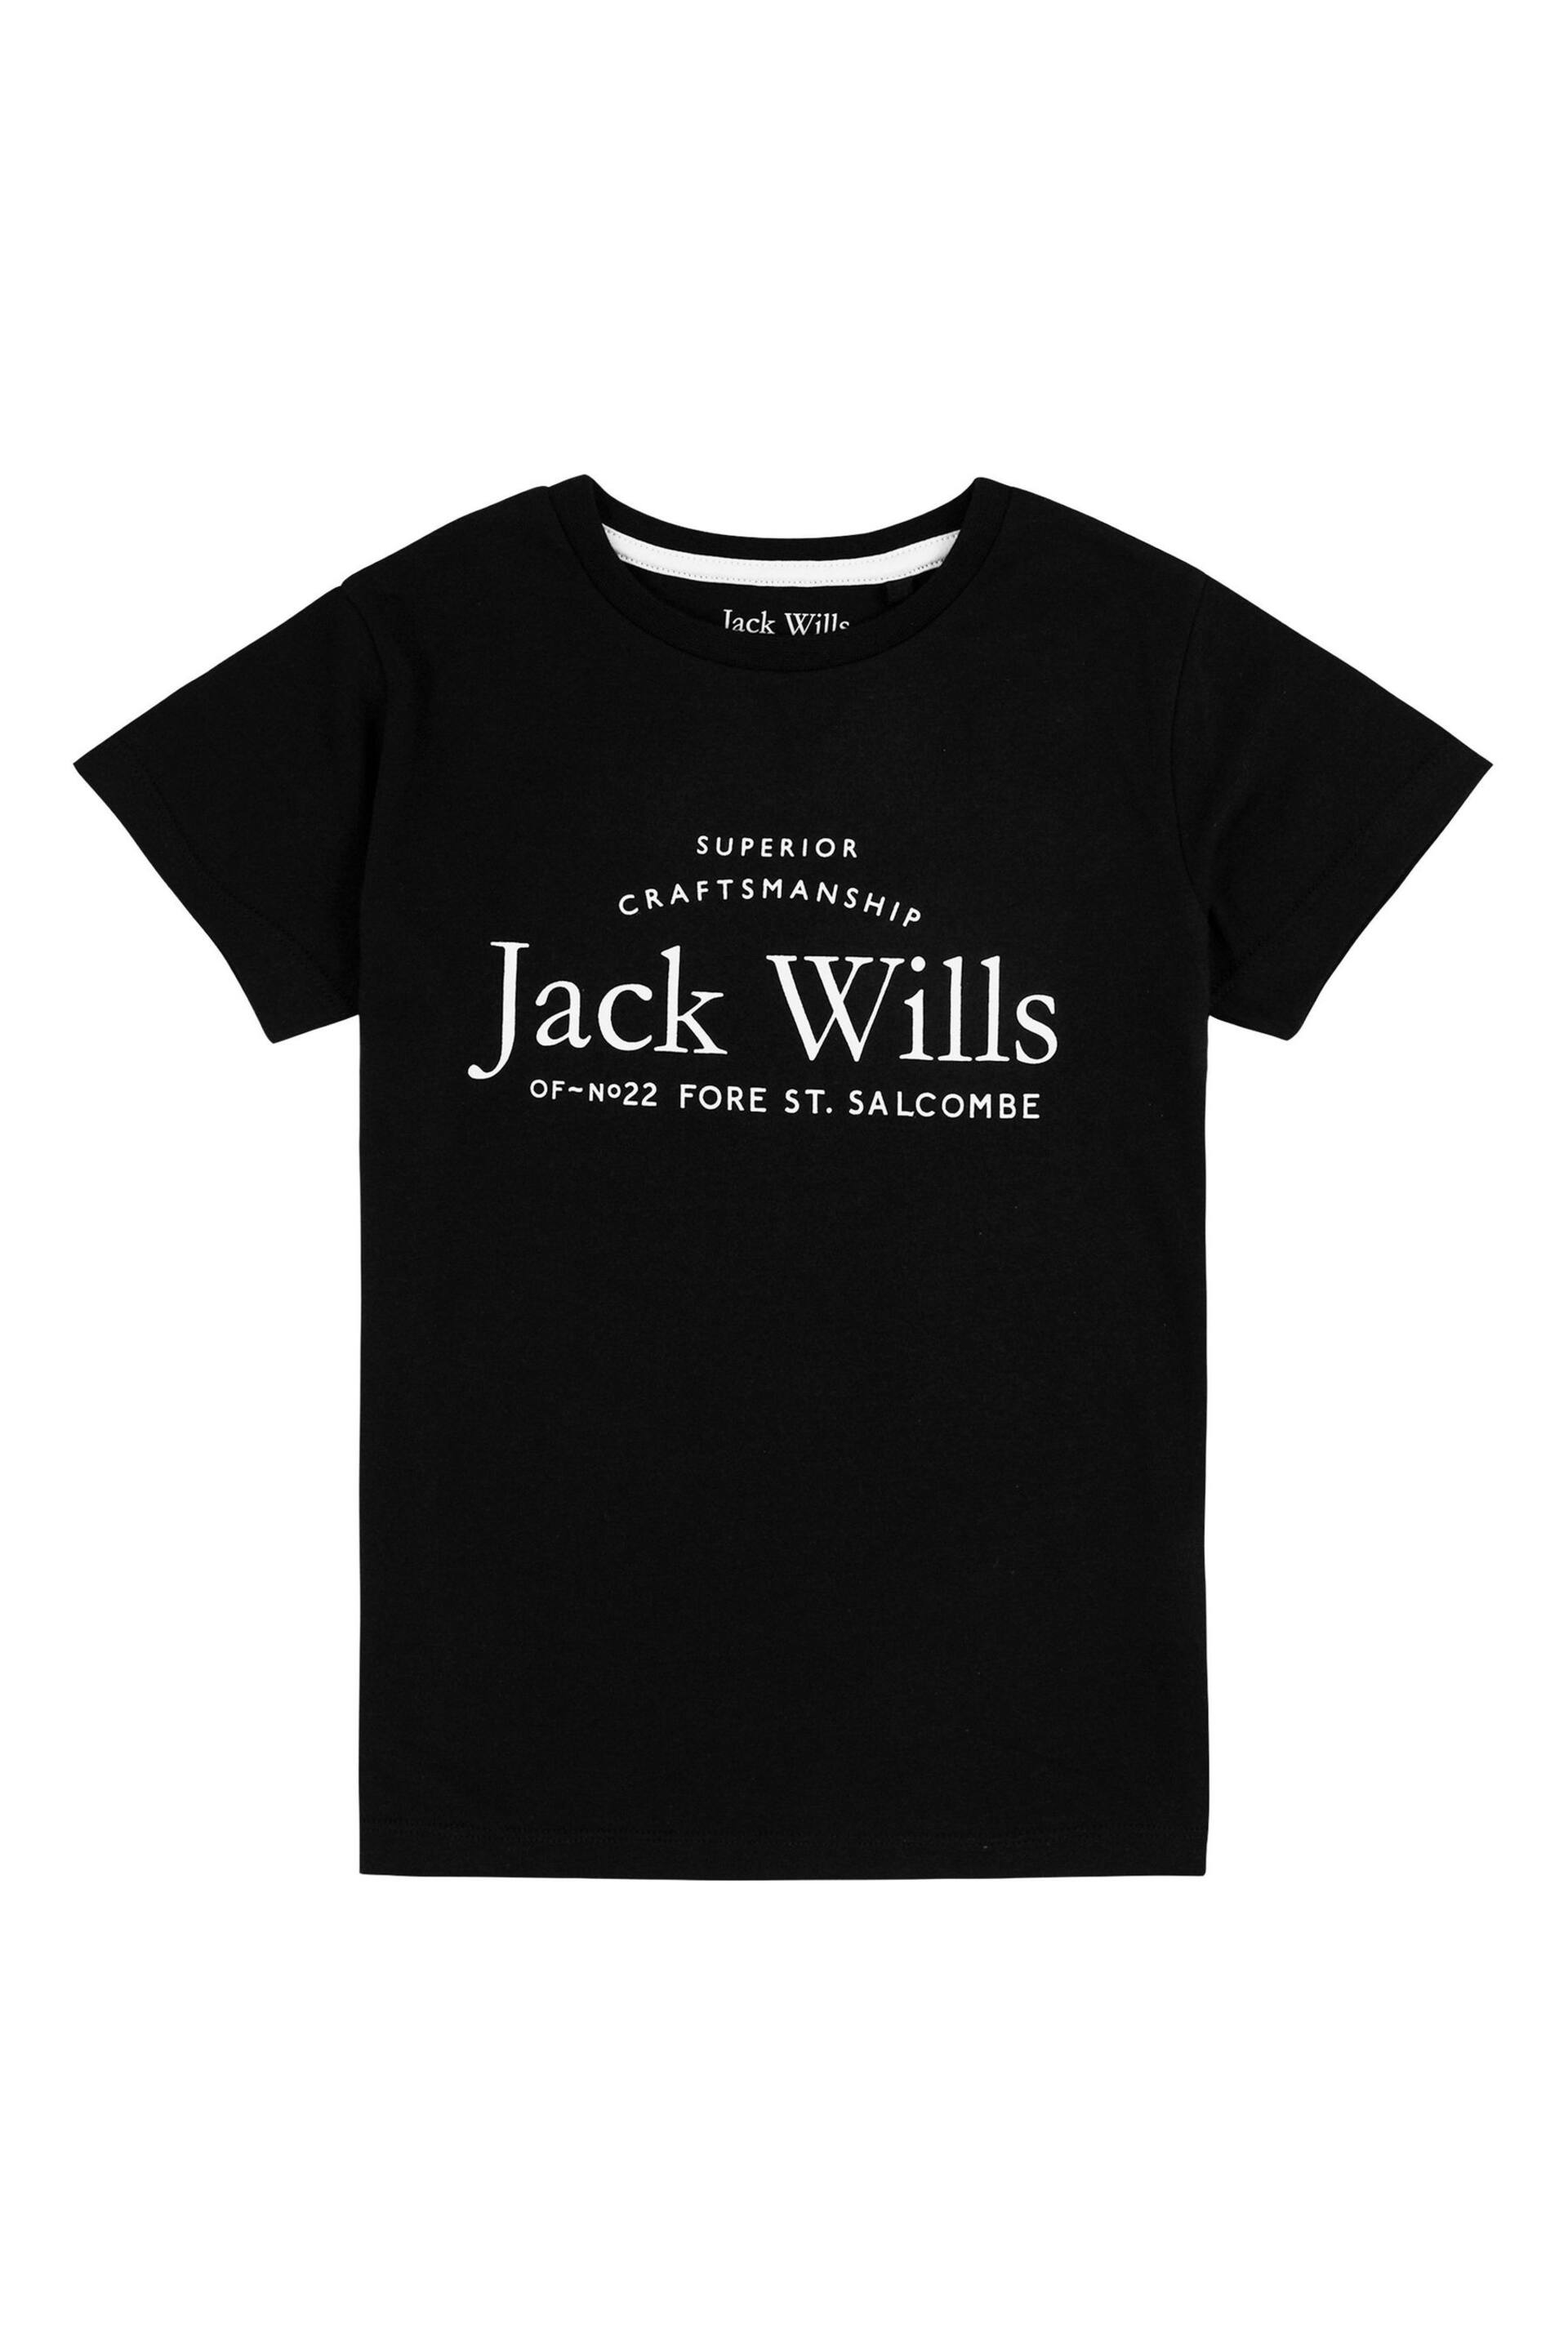 Jack Wills Classic Crew Neck Black T-Shirt - Image 1 of 3